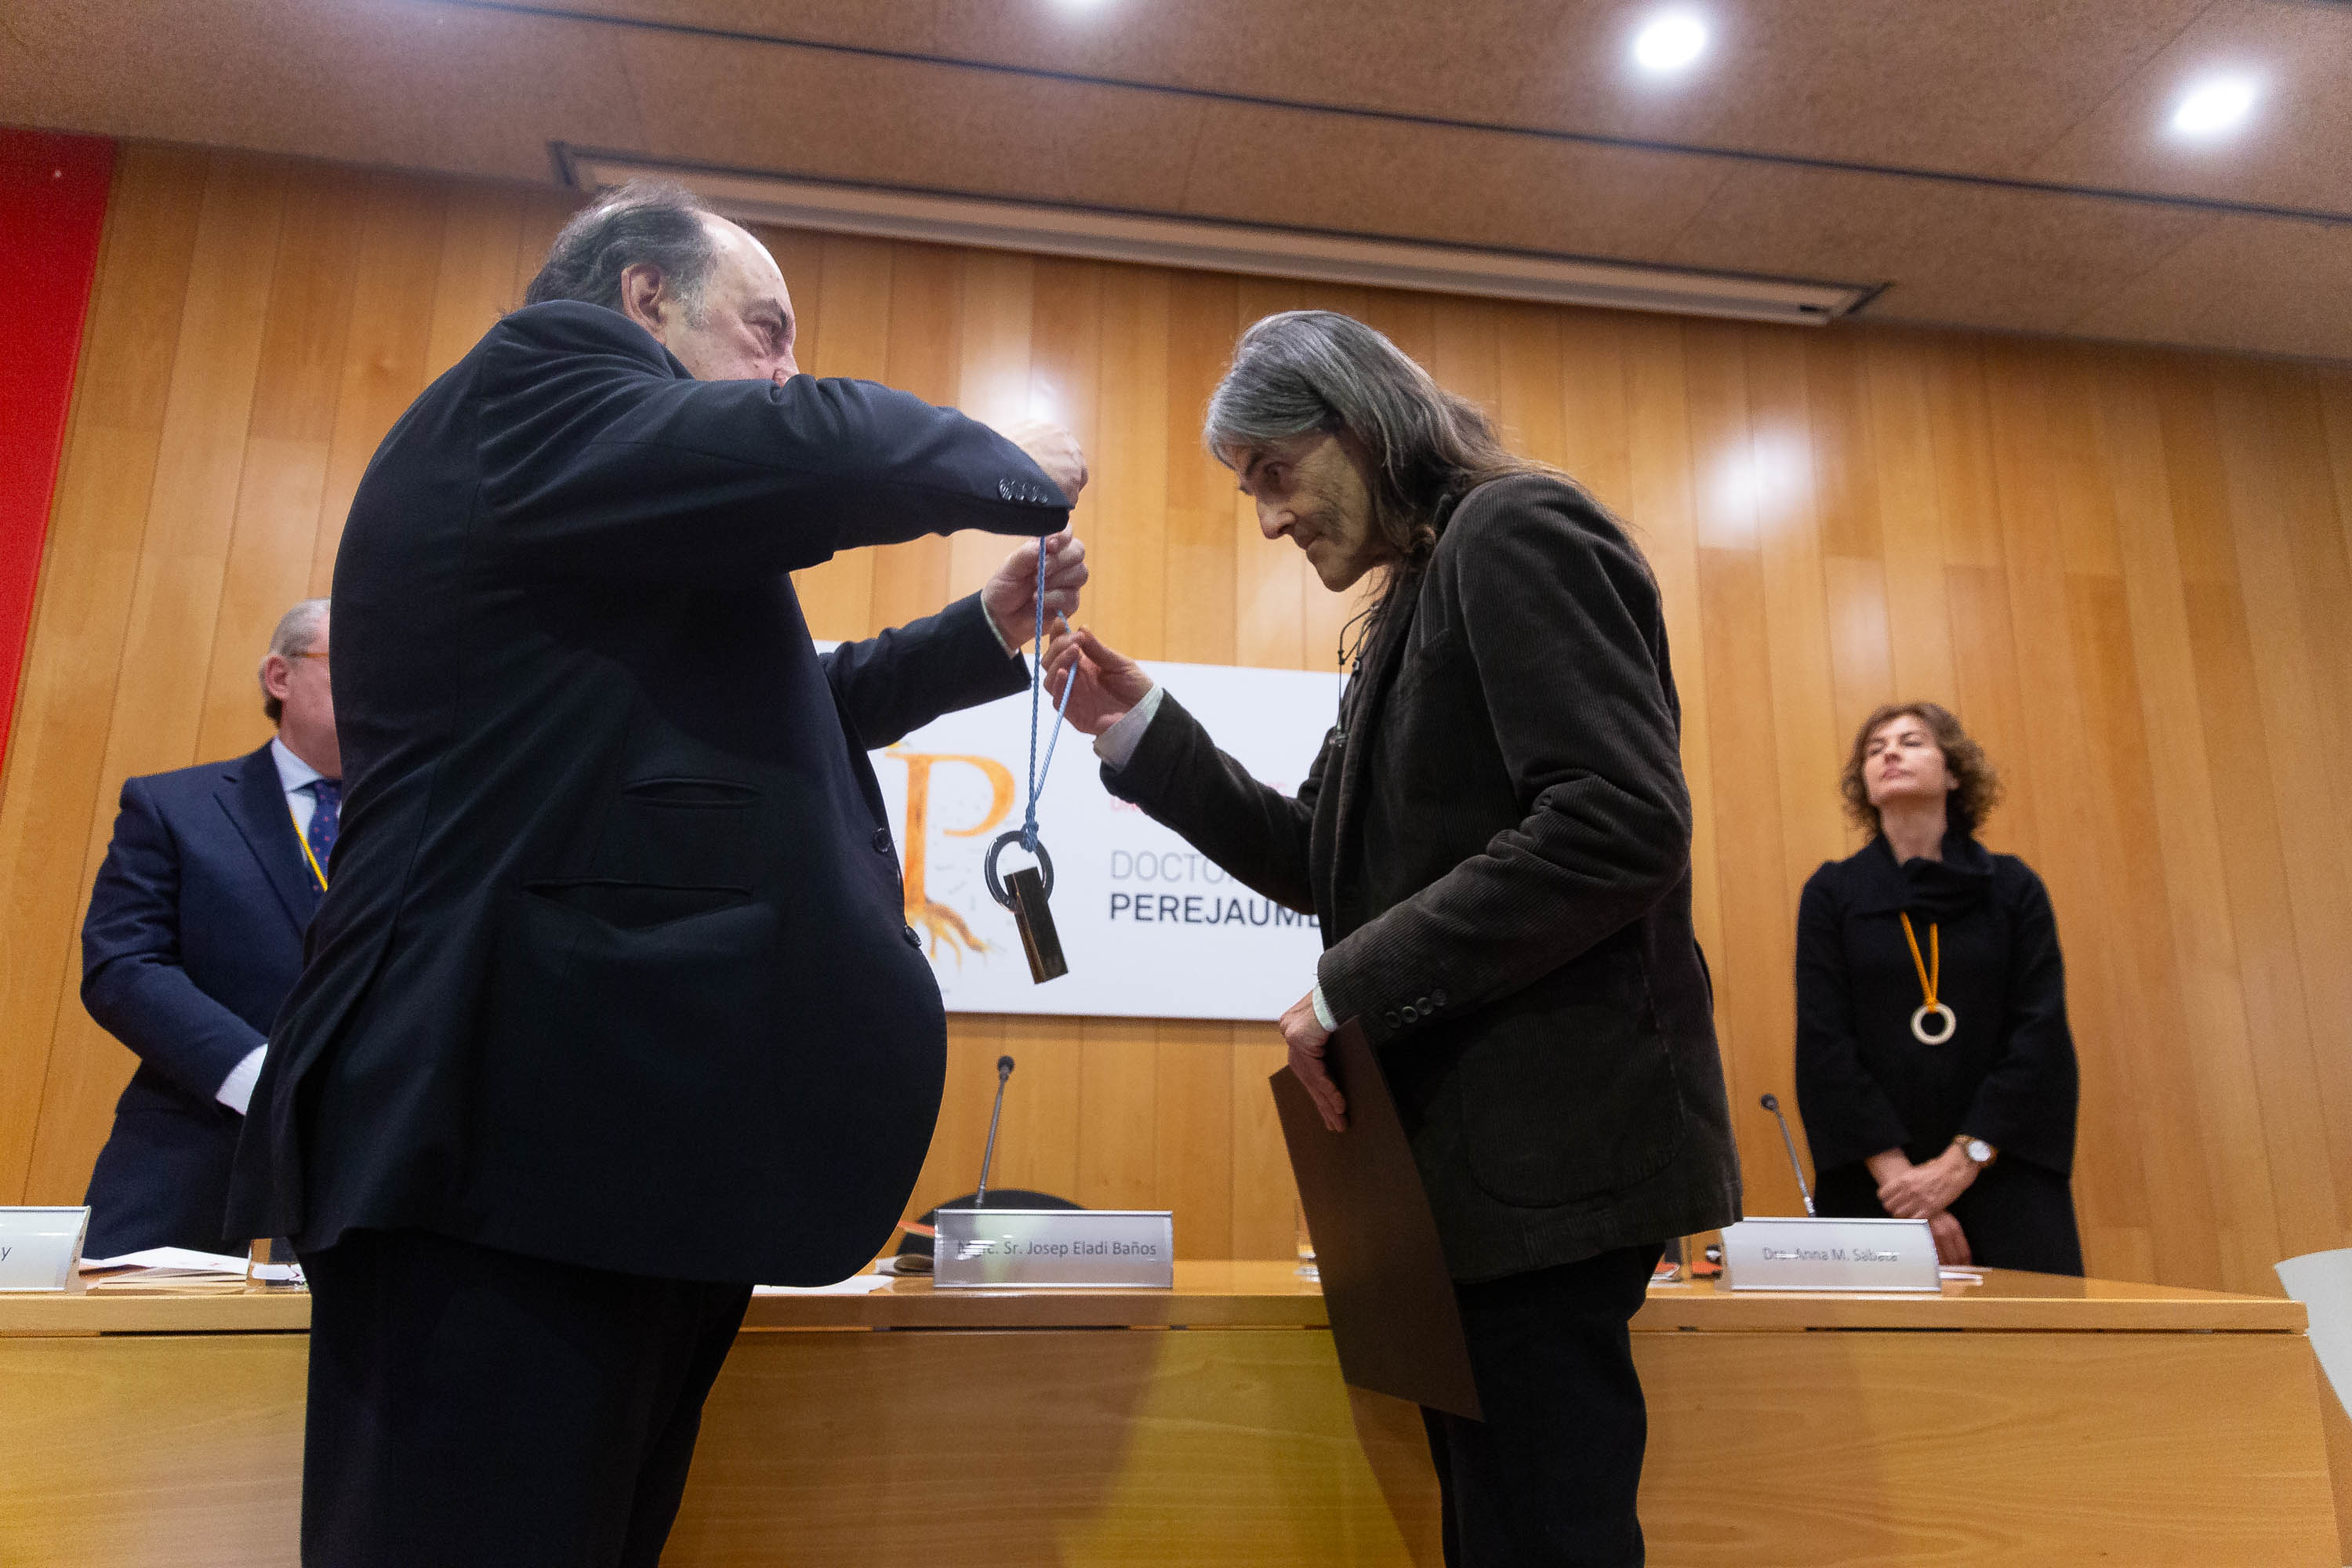 El rector de la UVic-UCC imposa la medalla de doctor honoris causa a Perejaume